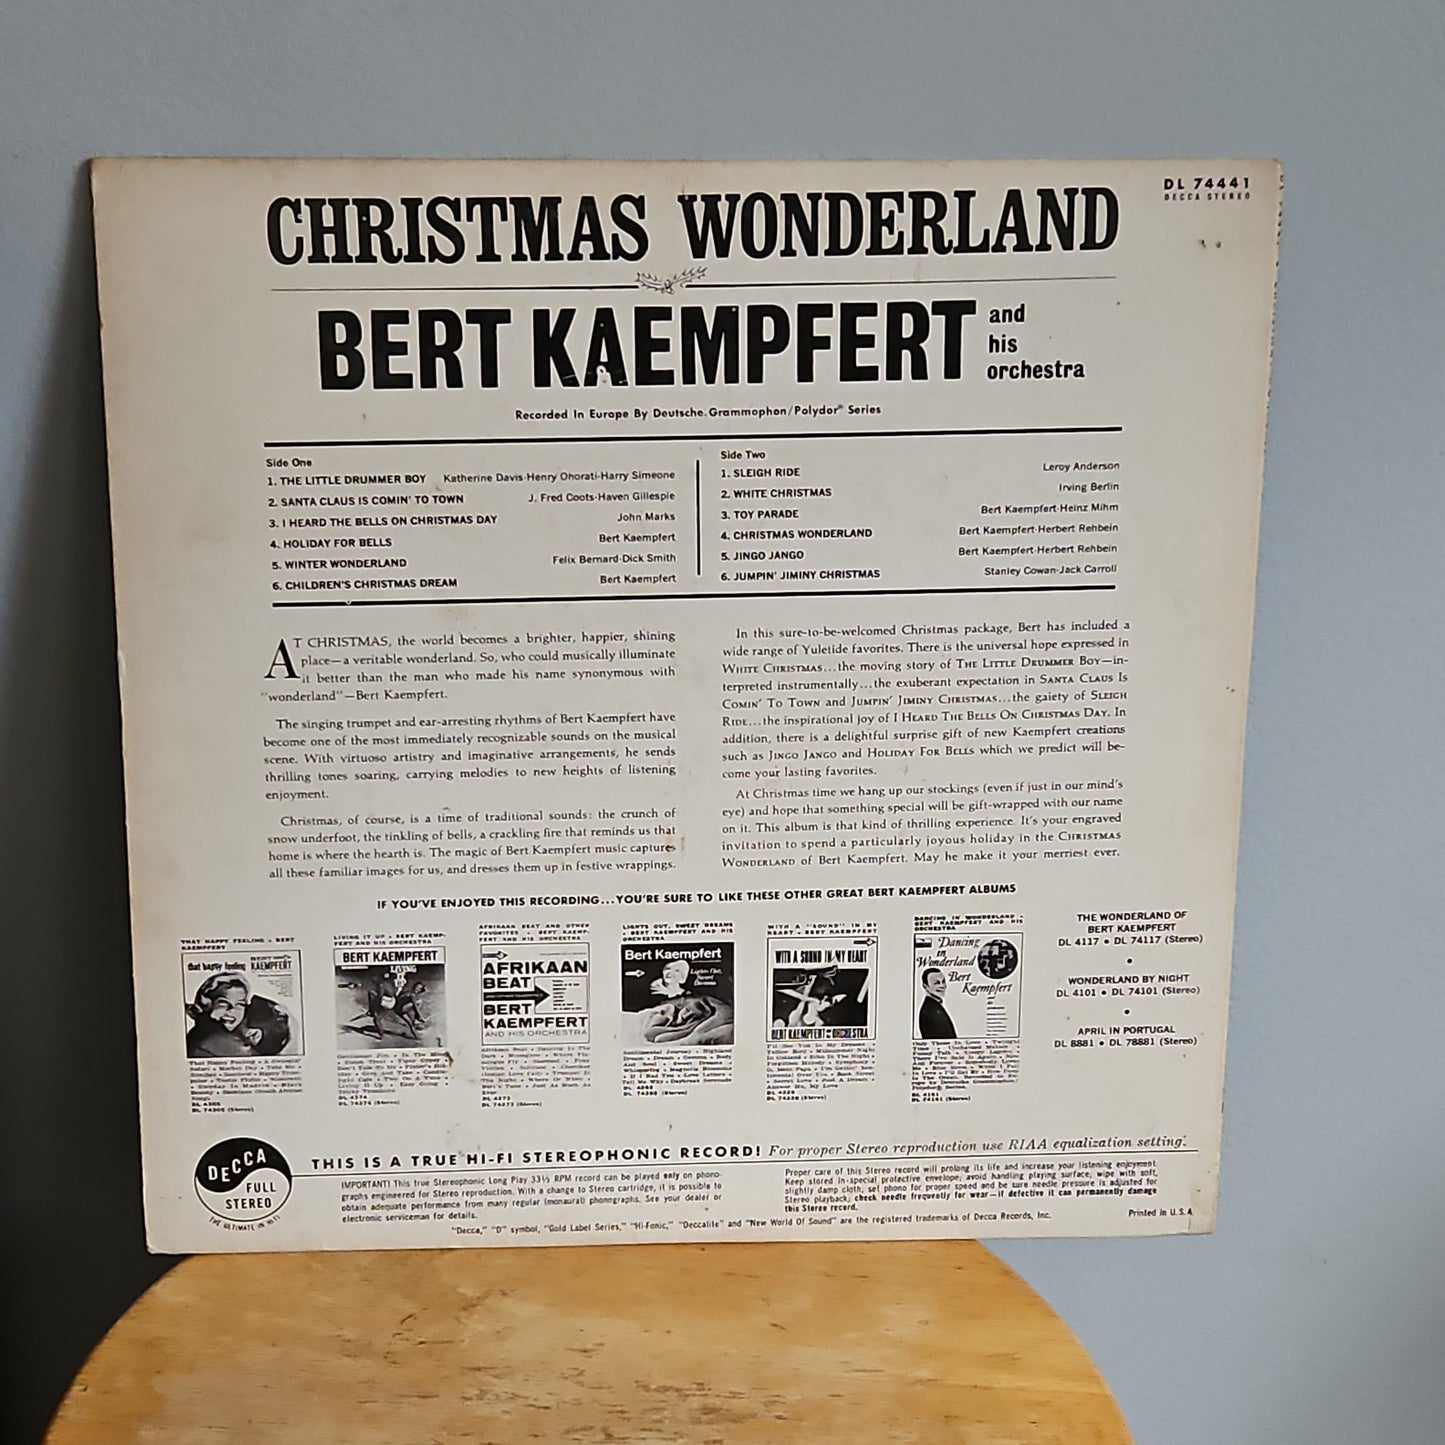 Bert Kaempfert and his Orchestra Christmas Wonderland By Decca Records